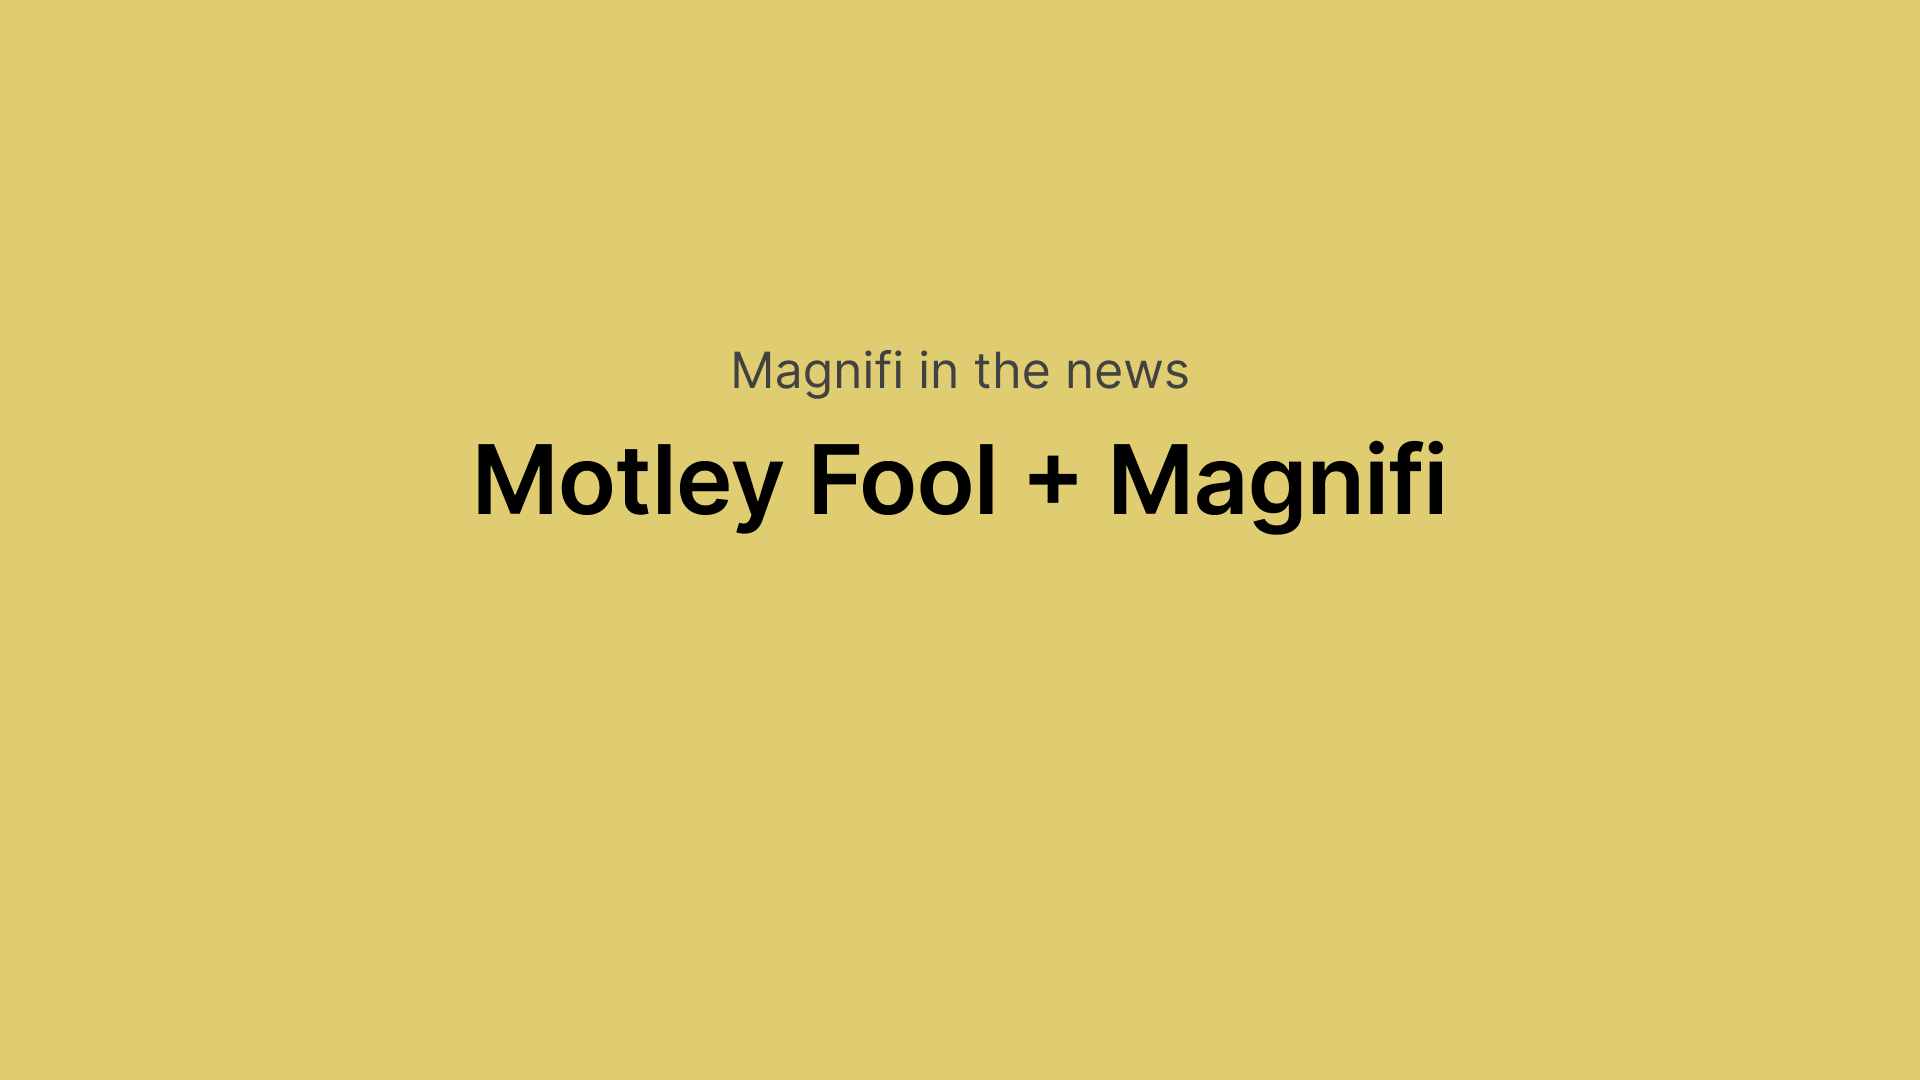 "Magnifi in the news
Motley Fool + Magnifi Survey"